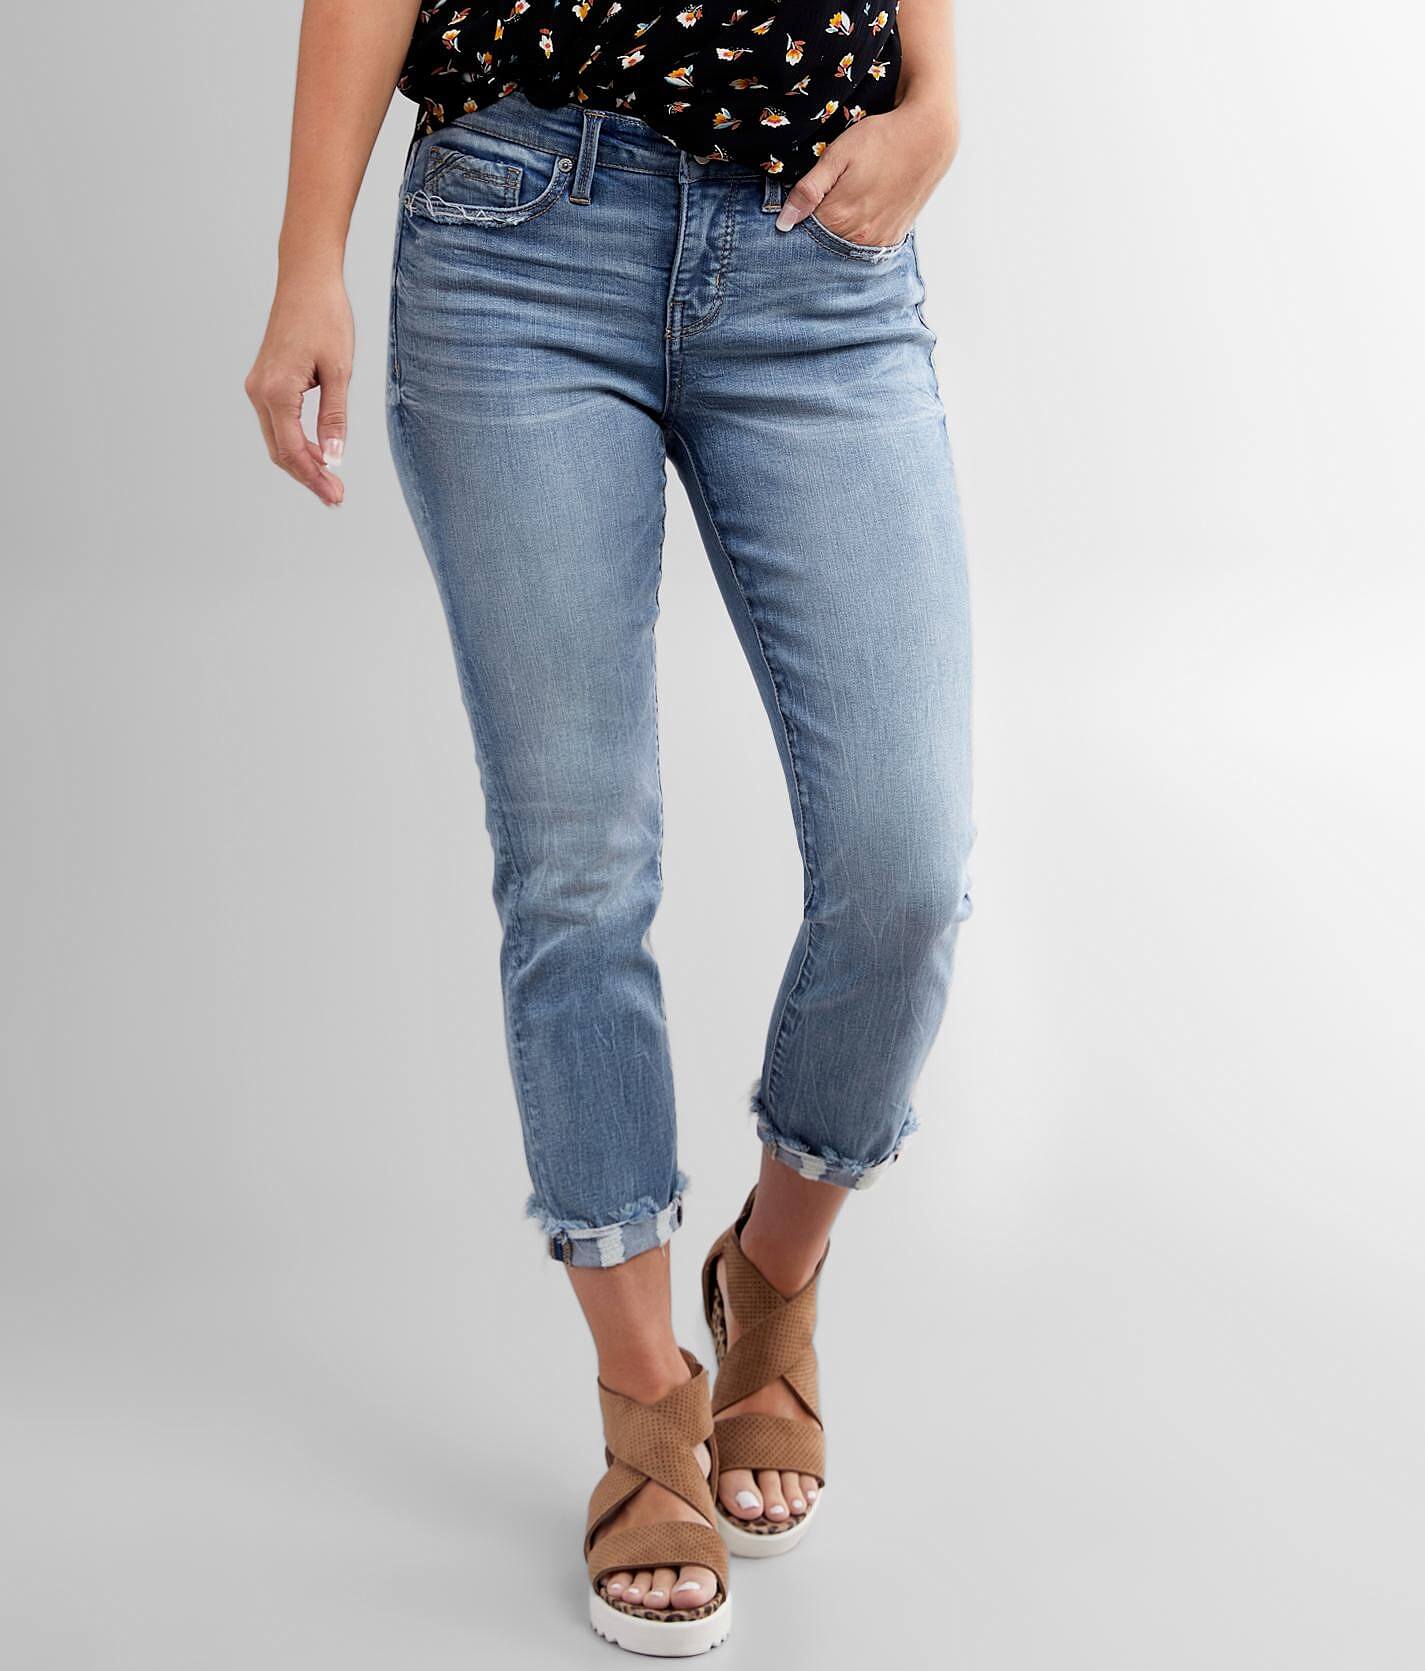 buckle capri jeans